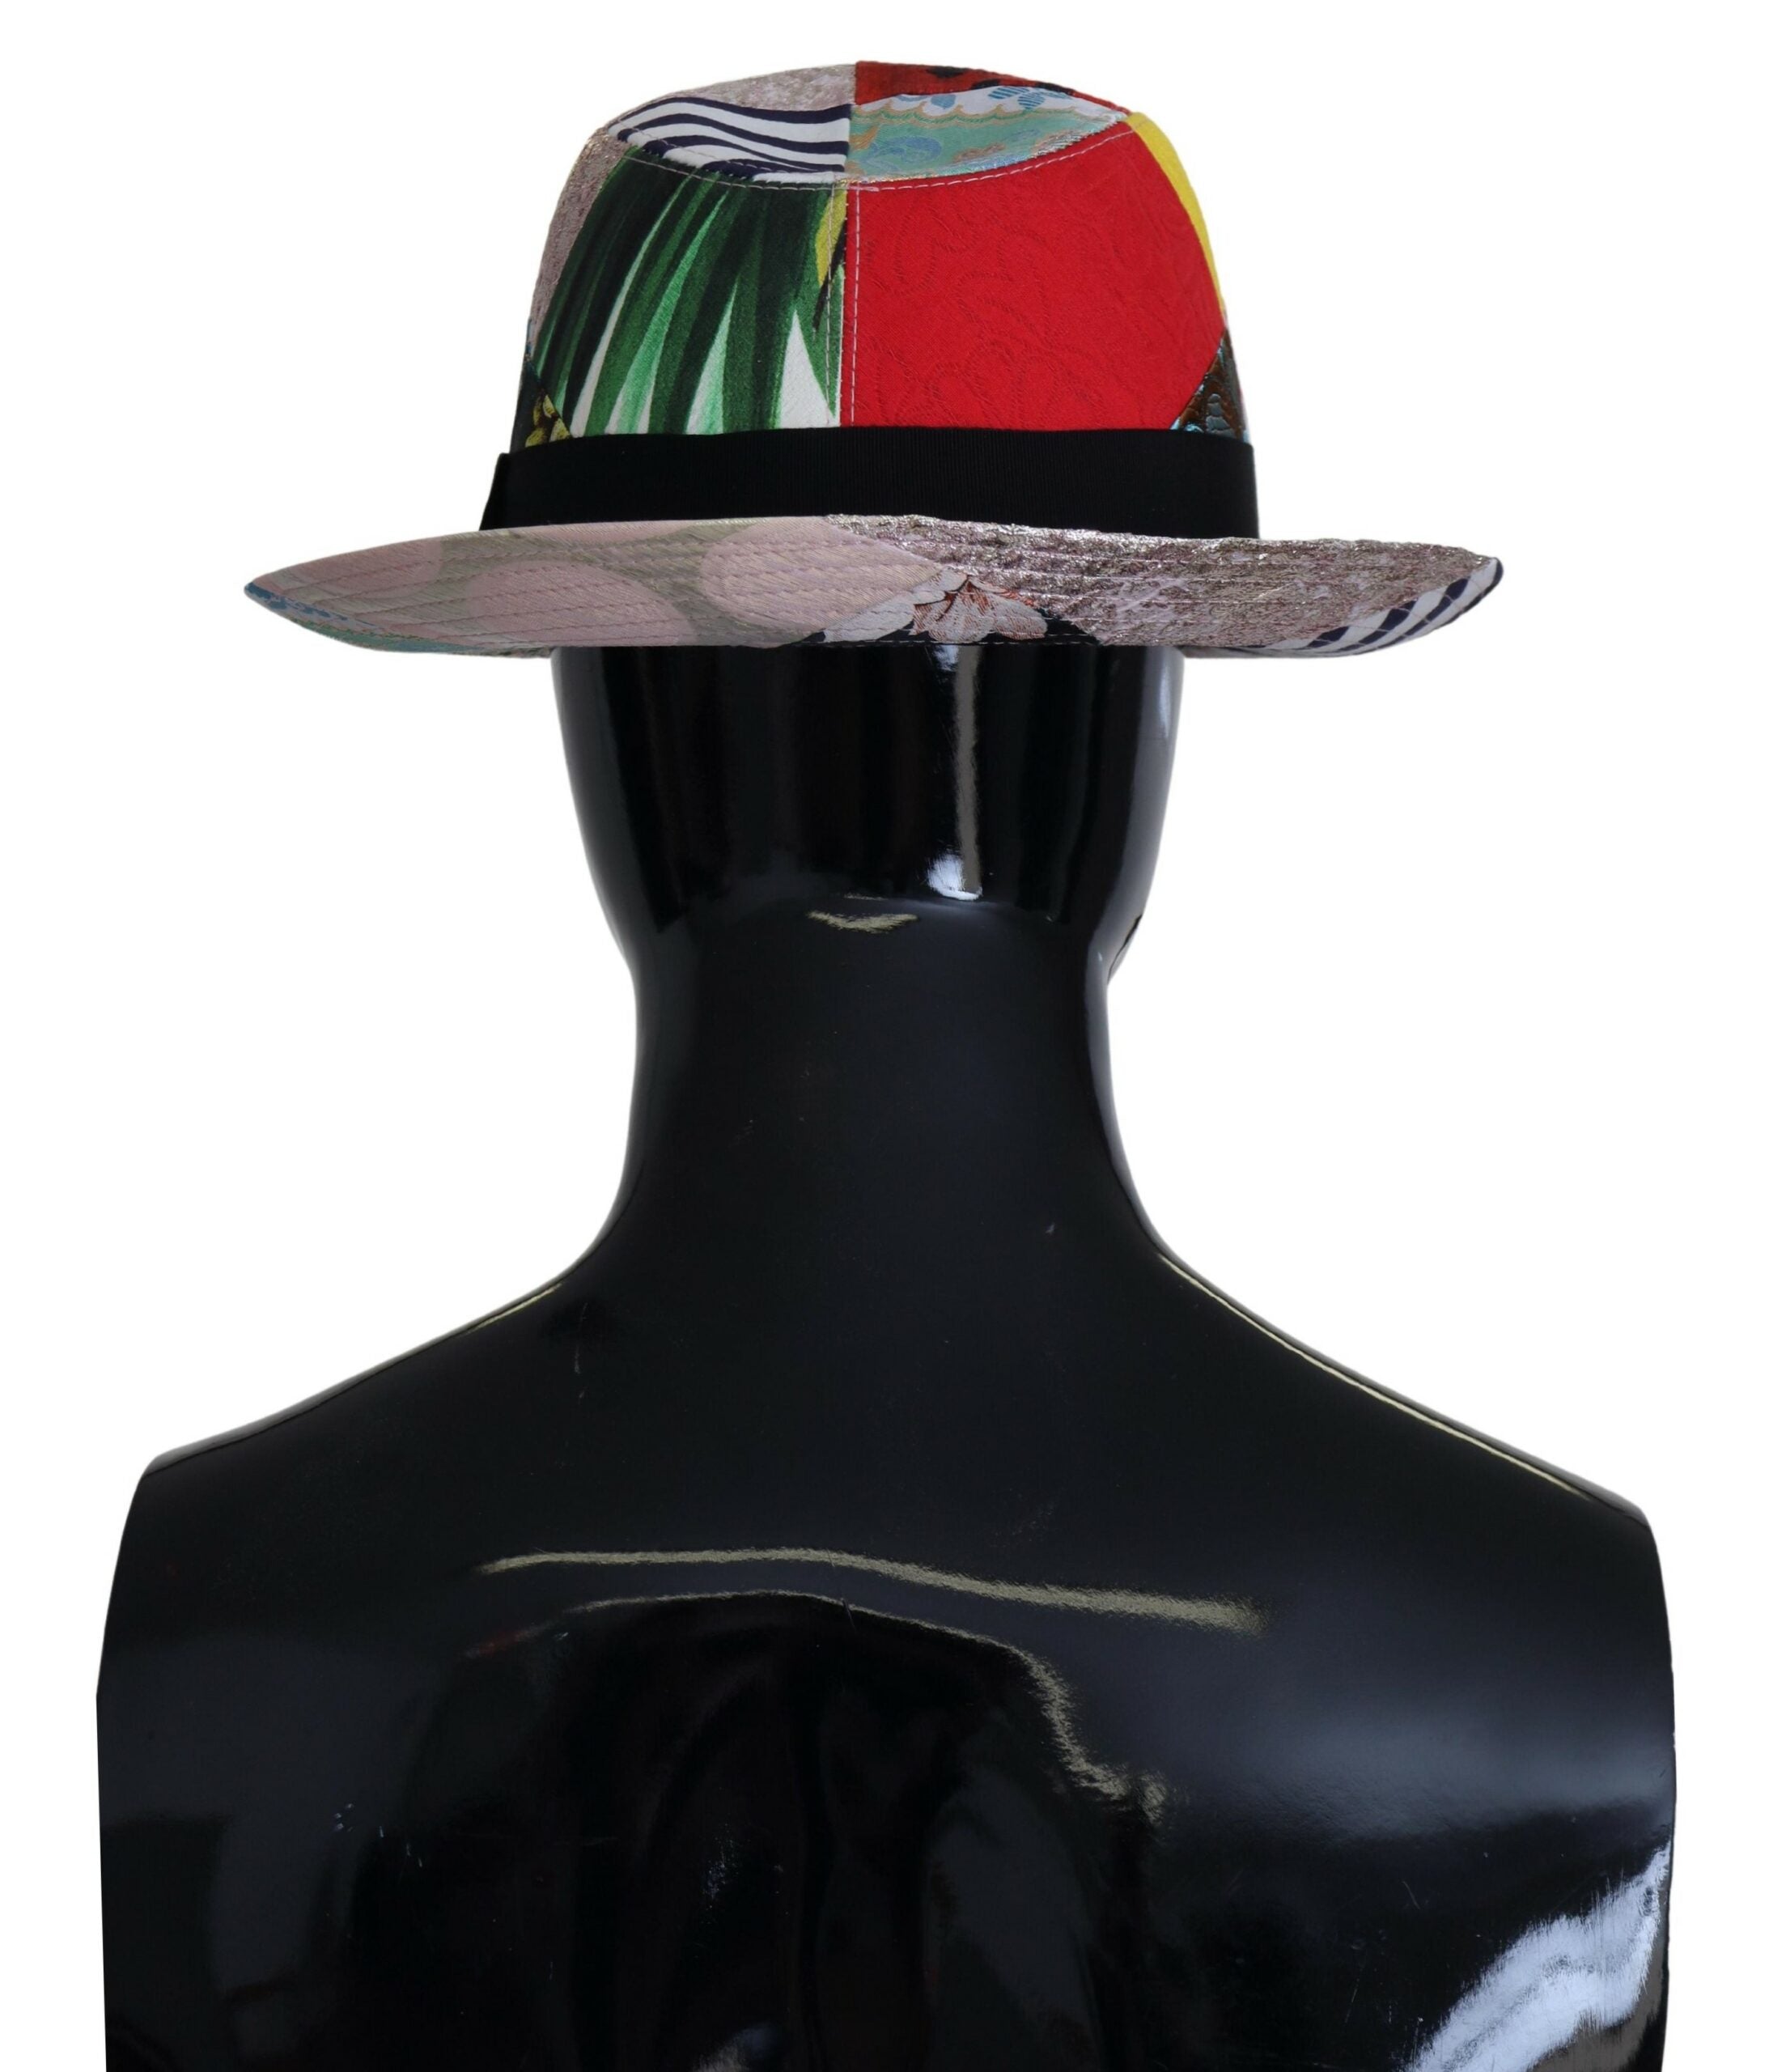 Dolce & Gabbana Eclectic Chic Multicolor Fedora Cap